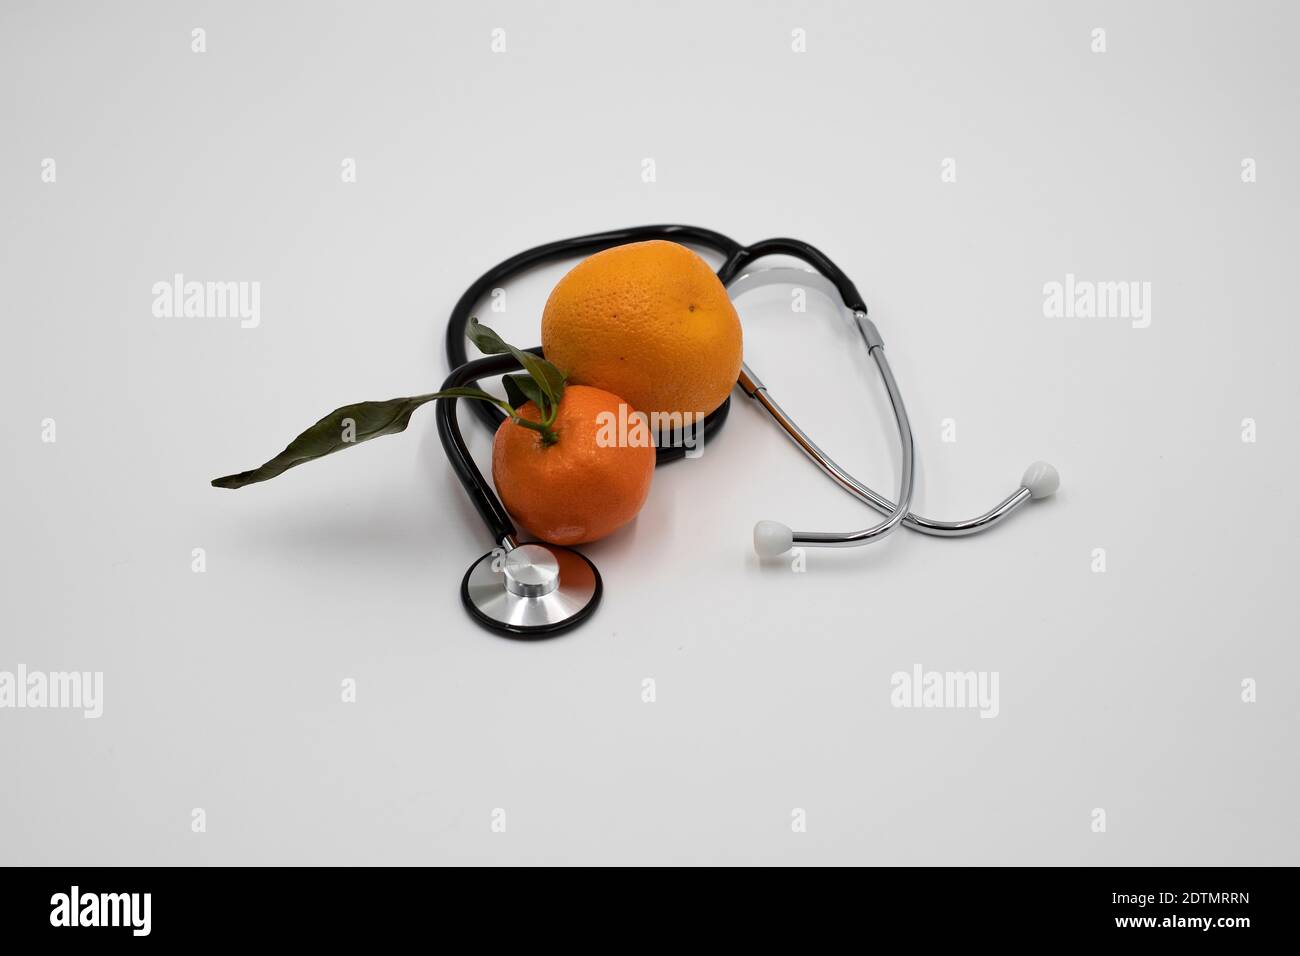 Orange and stethoscope on a white bacground Stock Photo